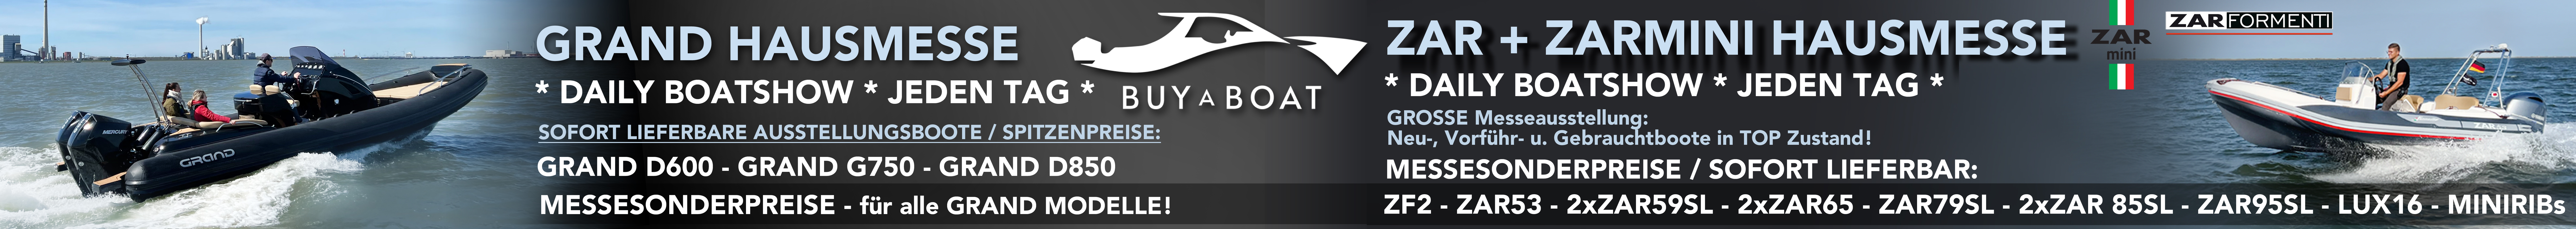 Daily Boatshow buy-a-boat zarformenti zarmini grand